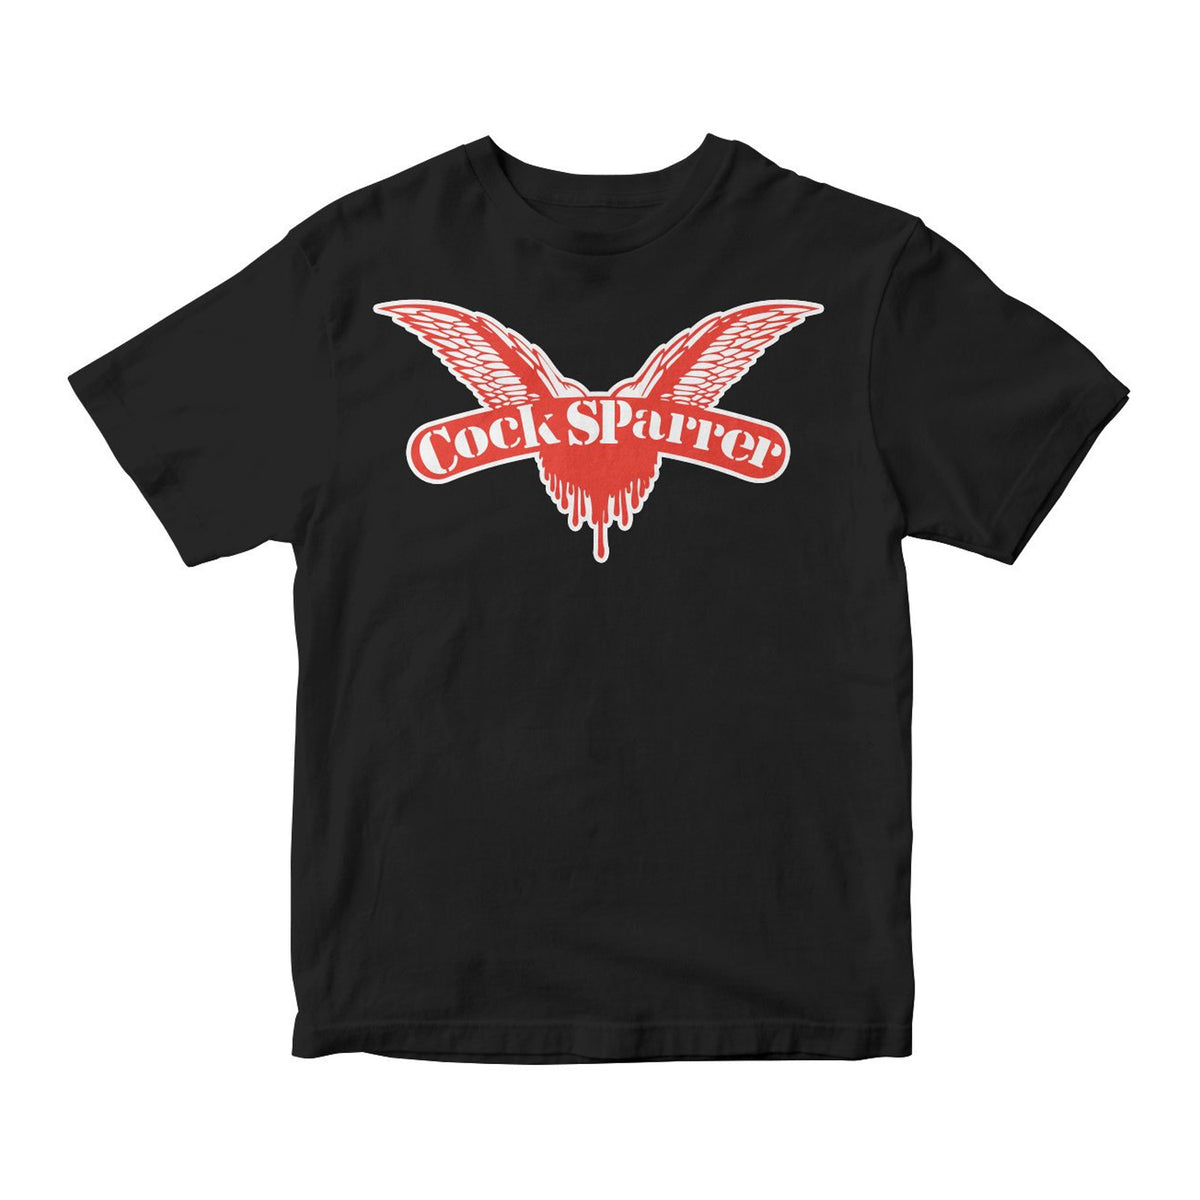 Cock Sparrer - Wings - Black - T-Shirt